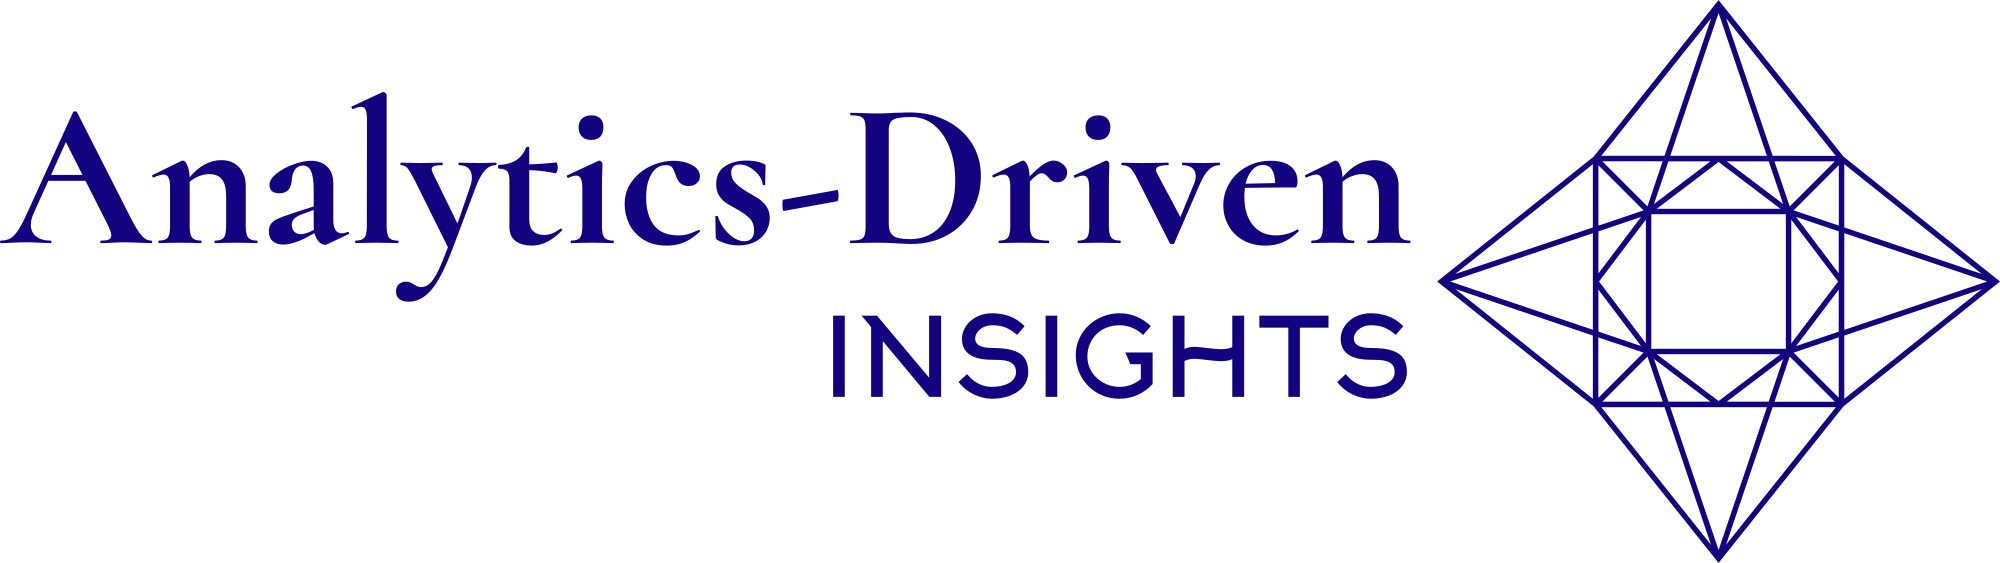 Analytics-Driven Insights